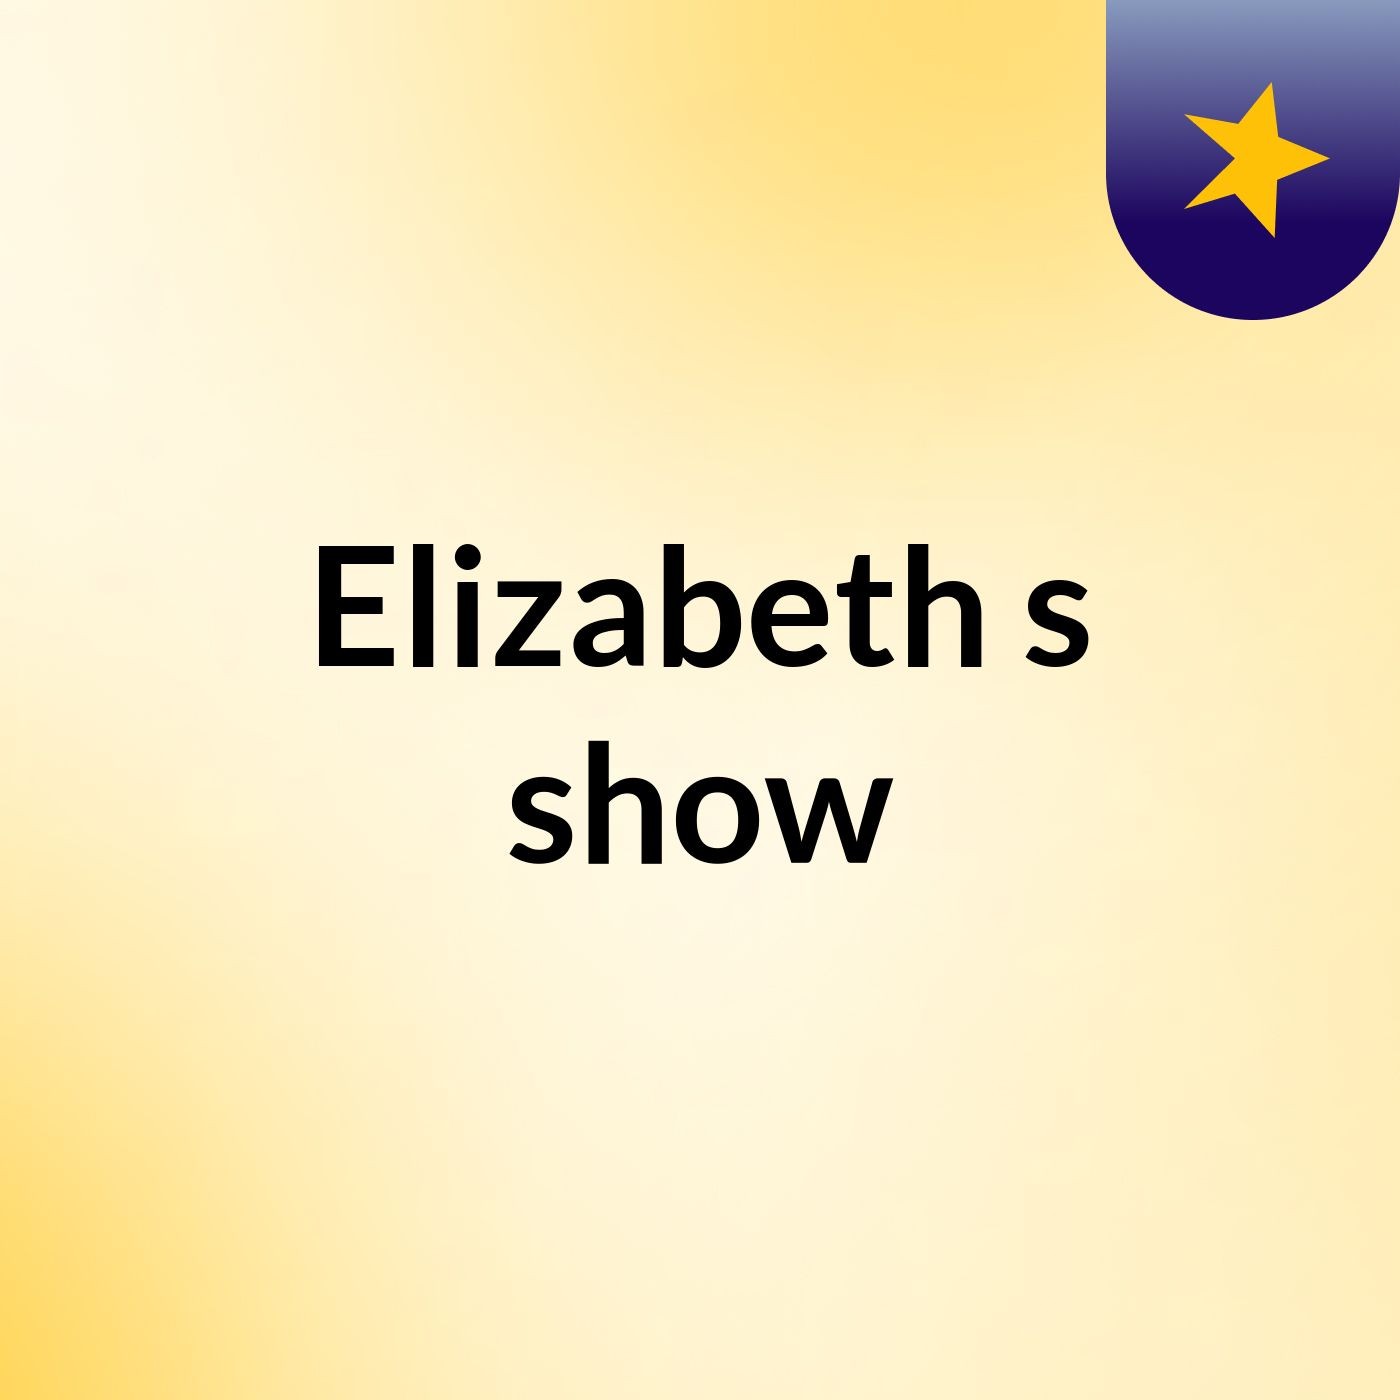 Elizabeth's show